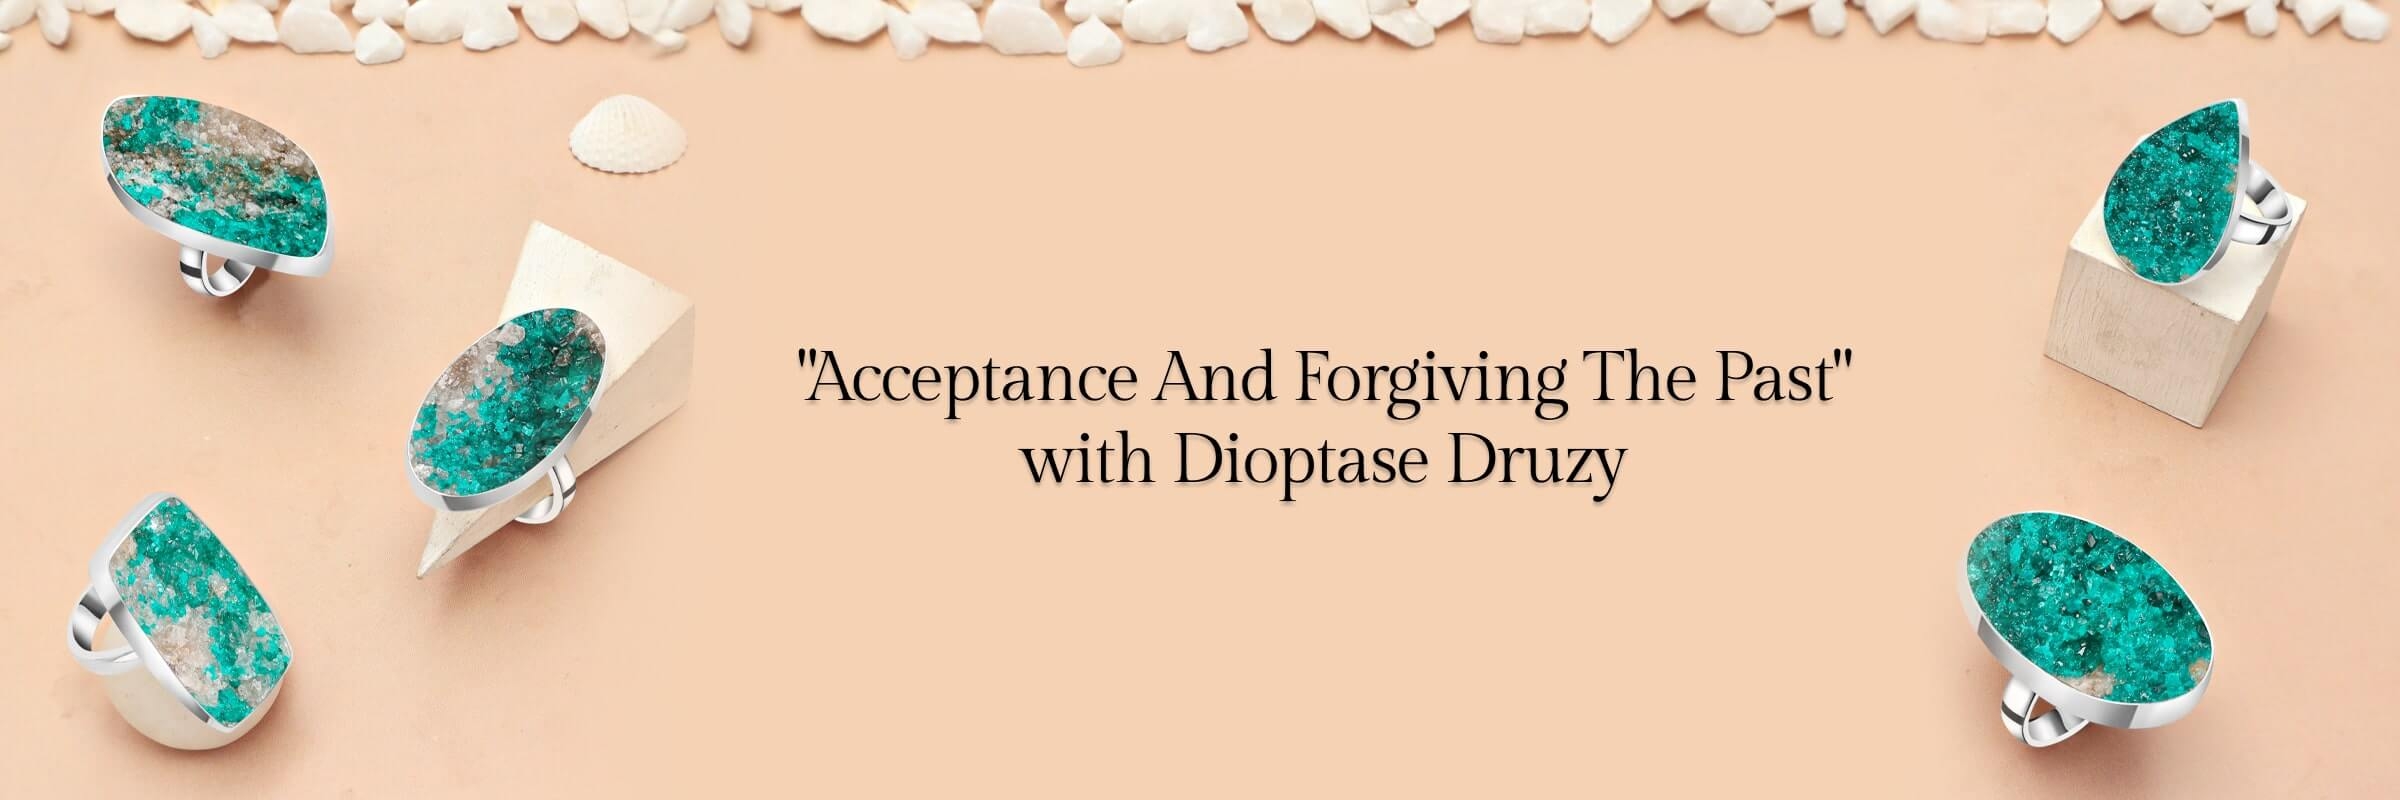 Dioptase Druzy Mental Healing Properties